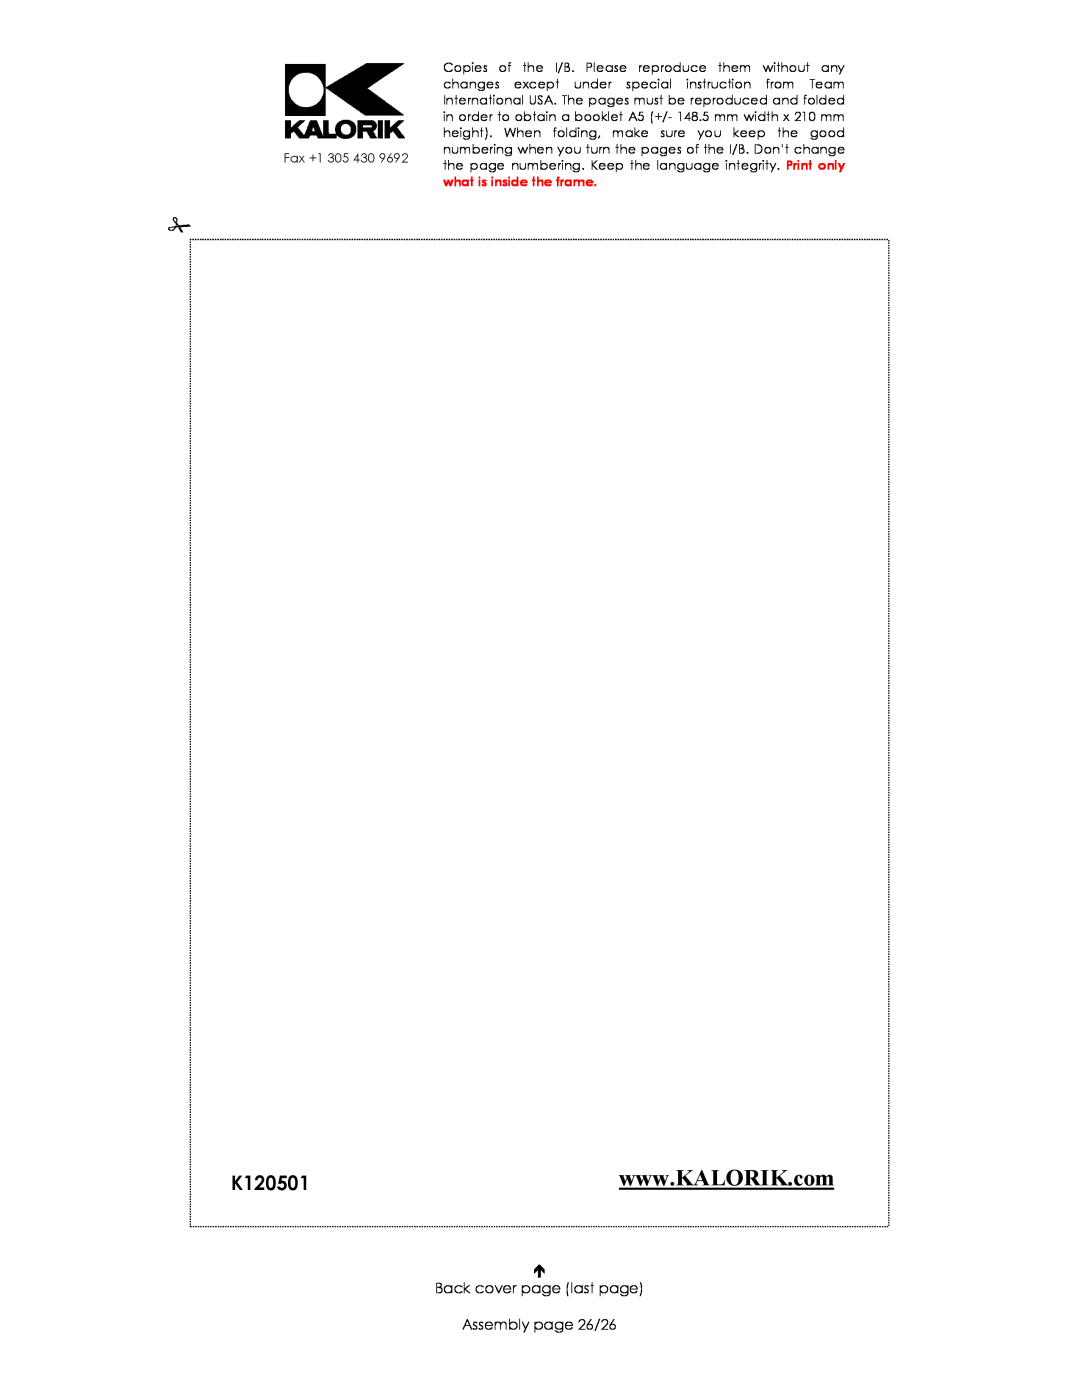 Kalorik CM 38933 manual Back cover page last page Assembly page 26/26 